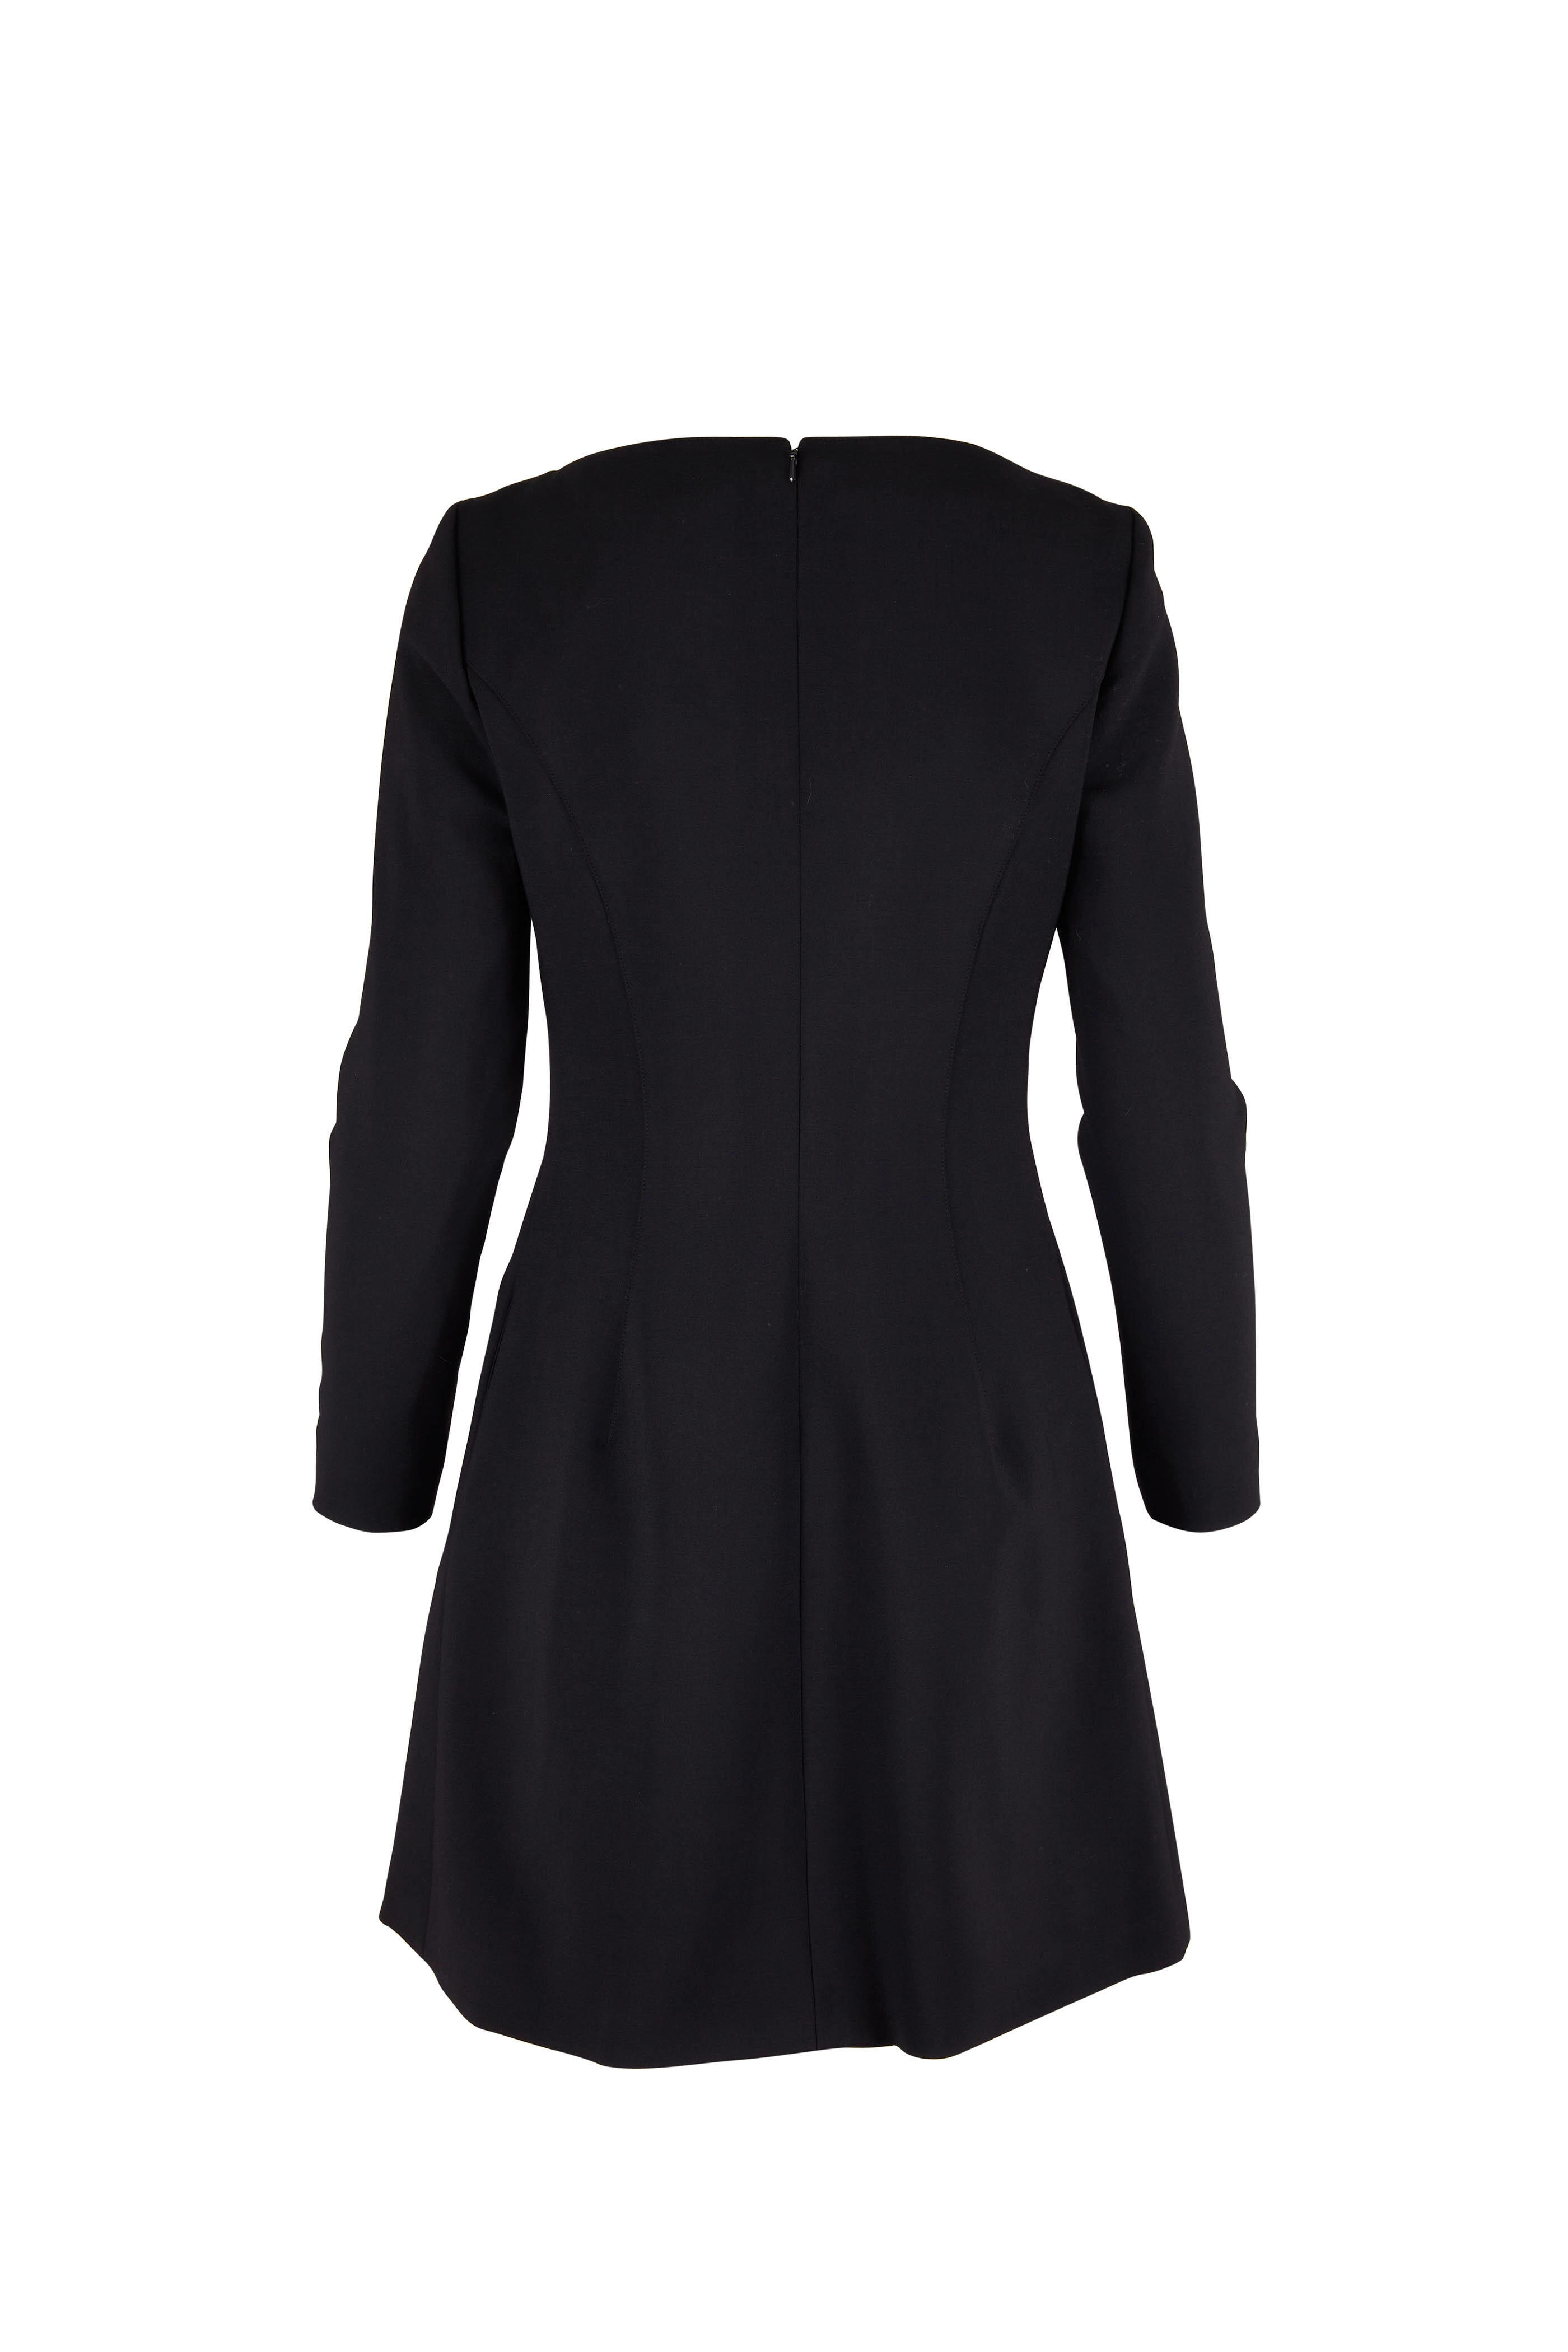 Carolina Herrera - Black Double-Faced Wool Long Sleeve A-Line Dress